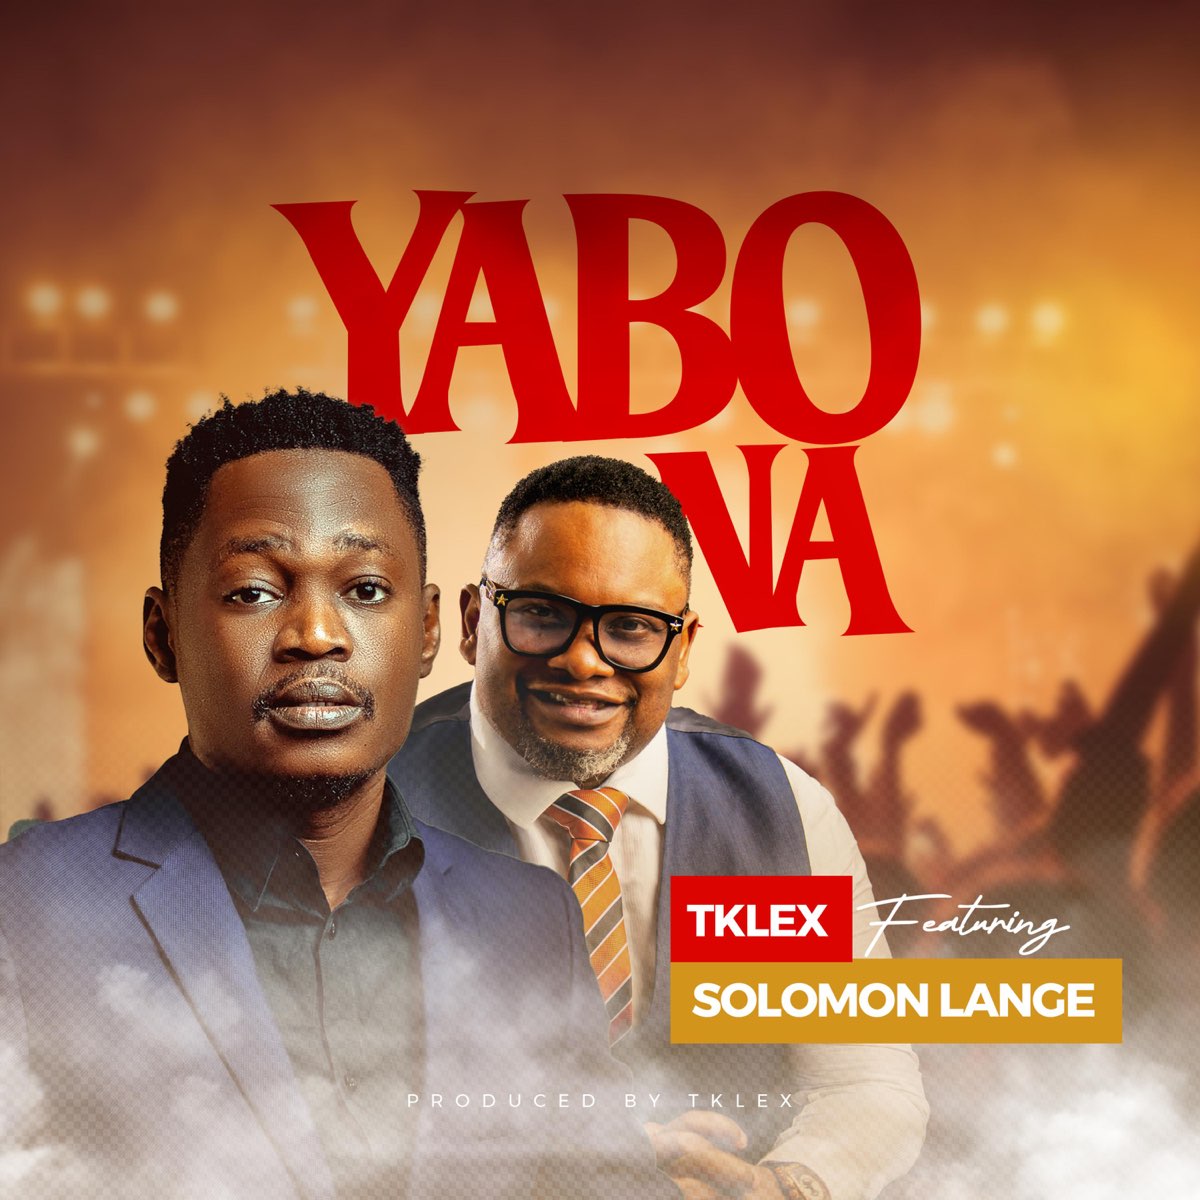 Yabo Na - Single - Album par Tklex & solomon lange - Apple Music